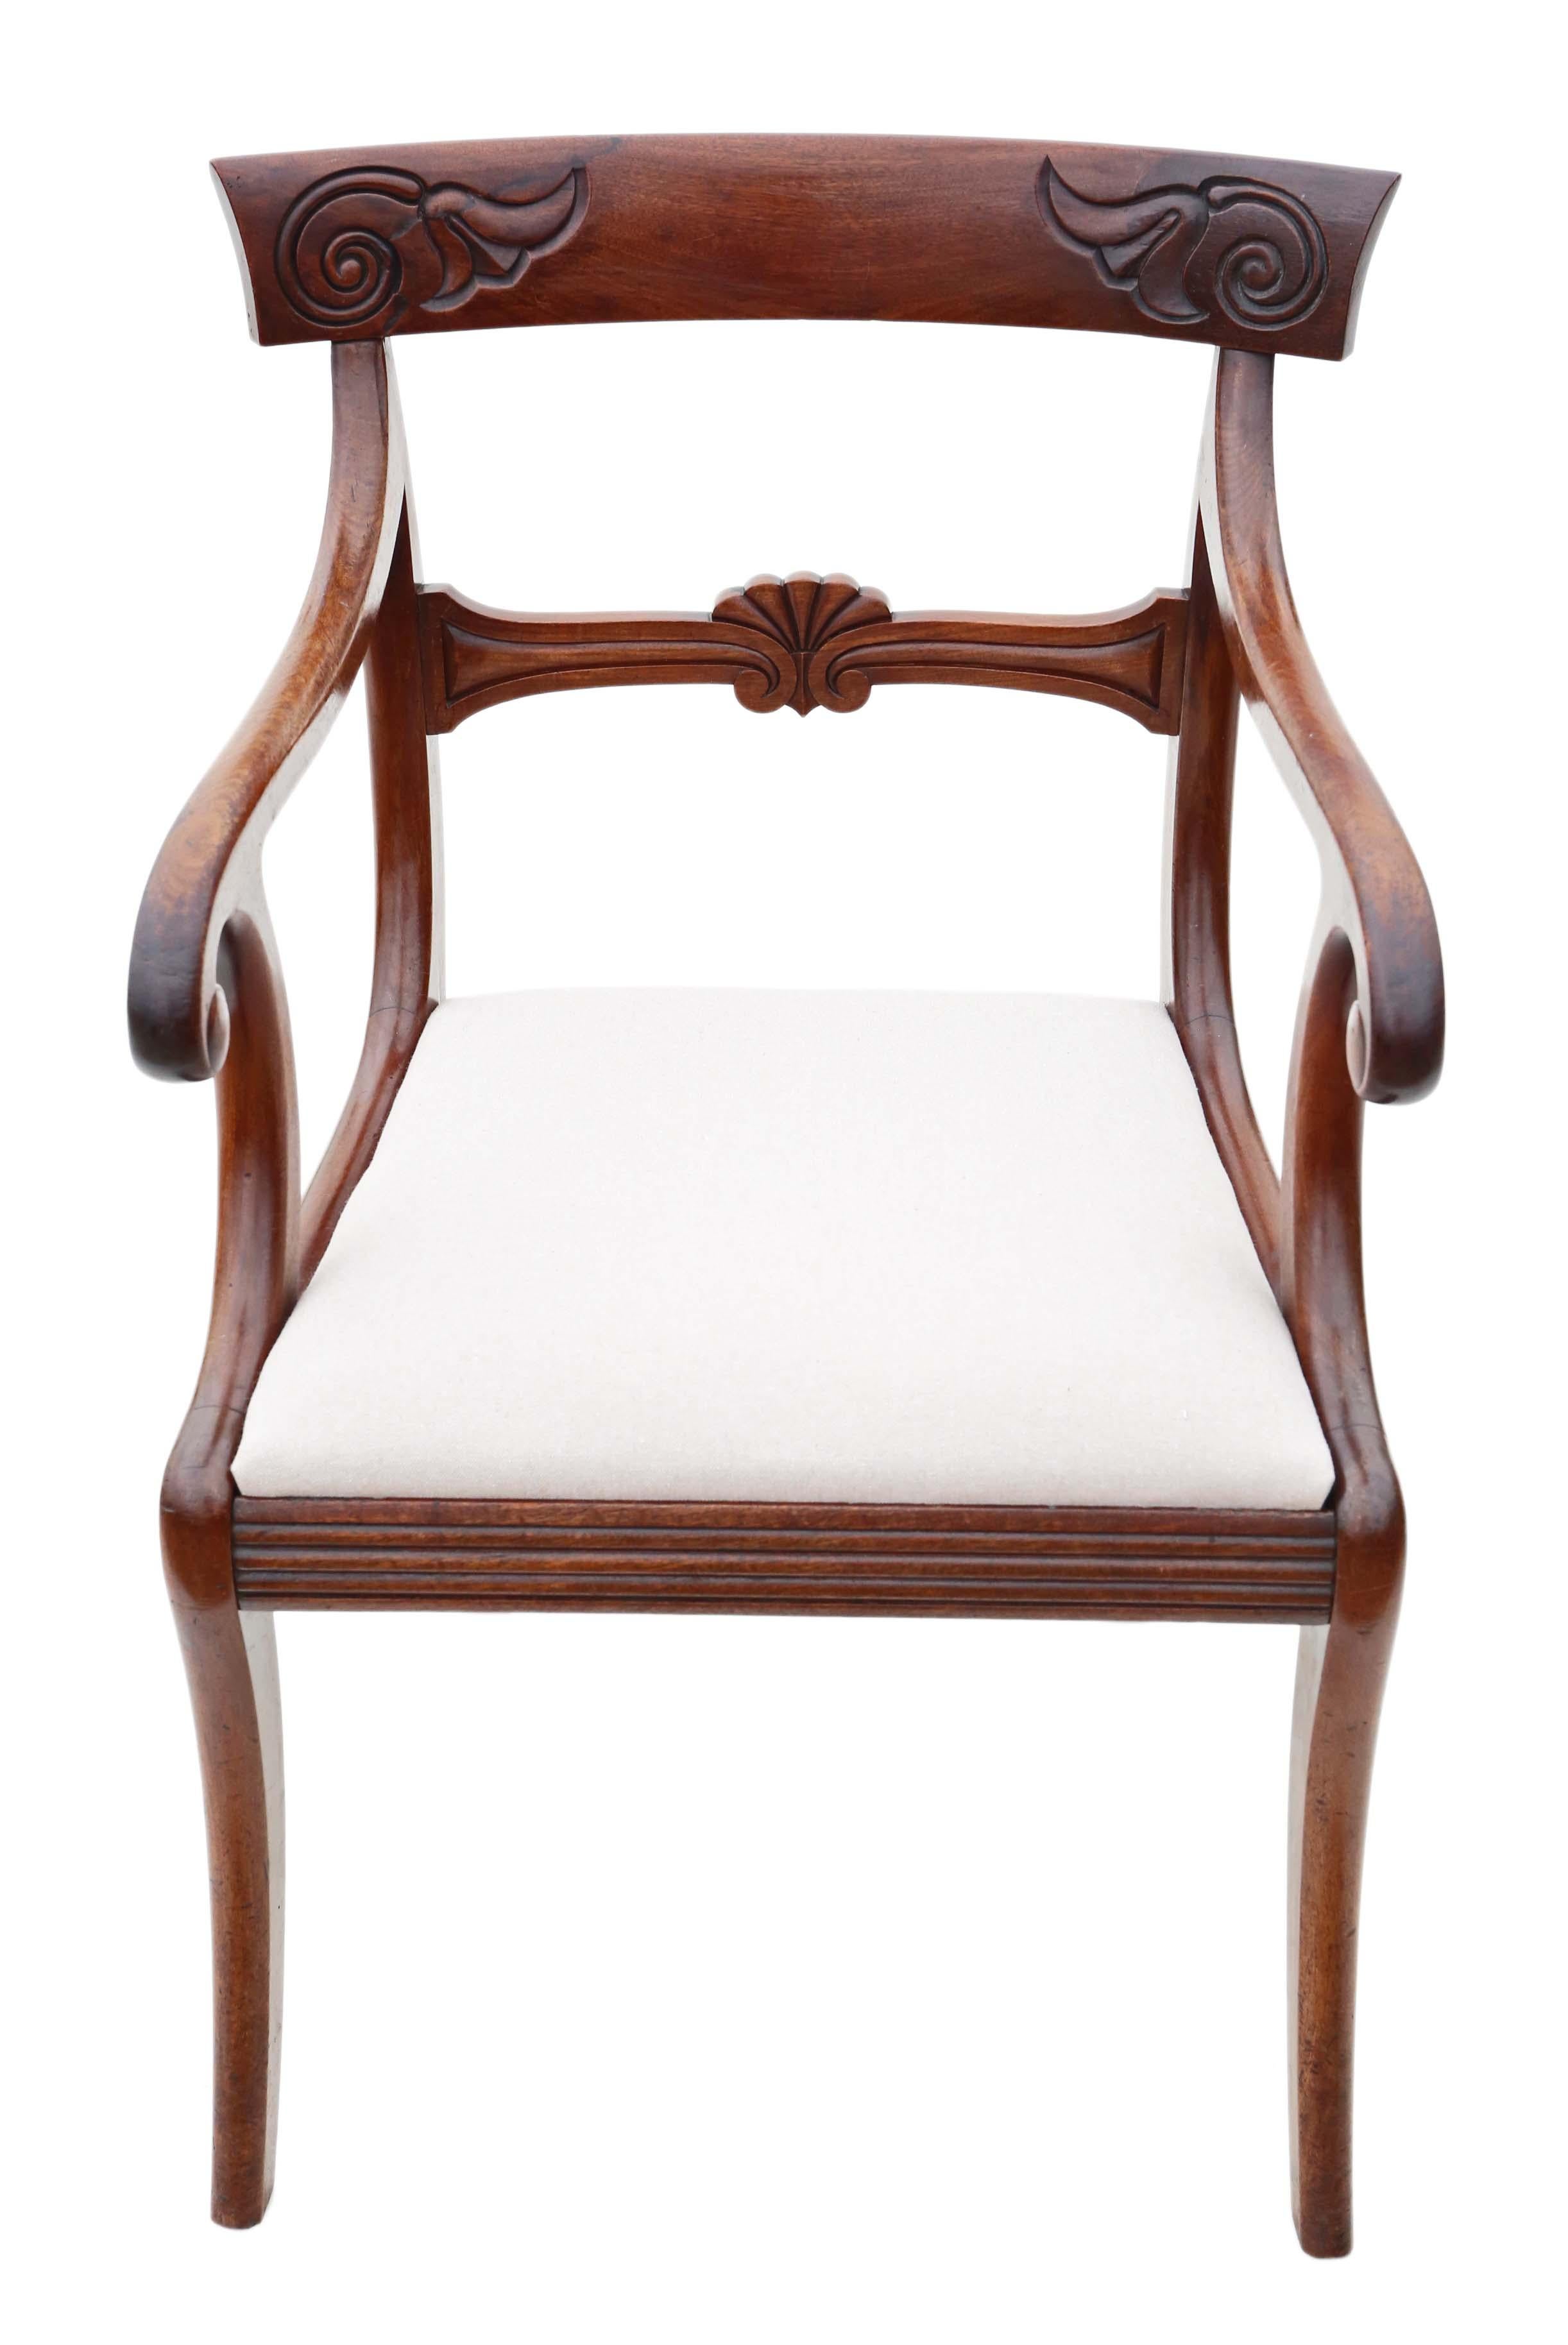 Esszimmerstühle aus kubanischem Mahagoni im Regency-Stil: 6er-Set (4+2), antike Qualität, um 1825 (Frühes 19. Jahrhundert) im Angebot